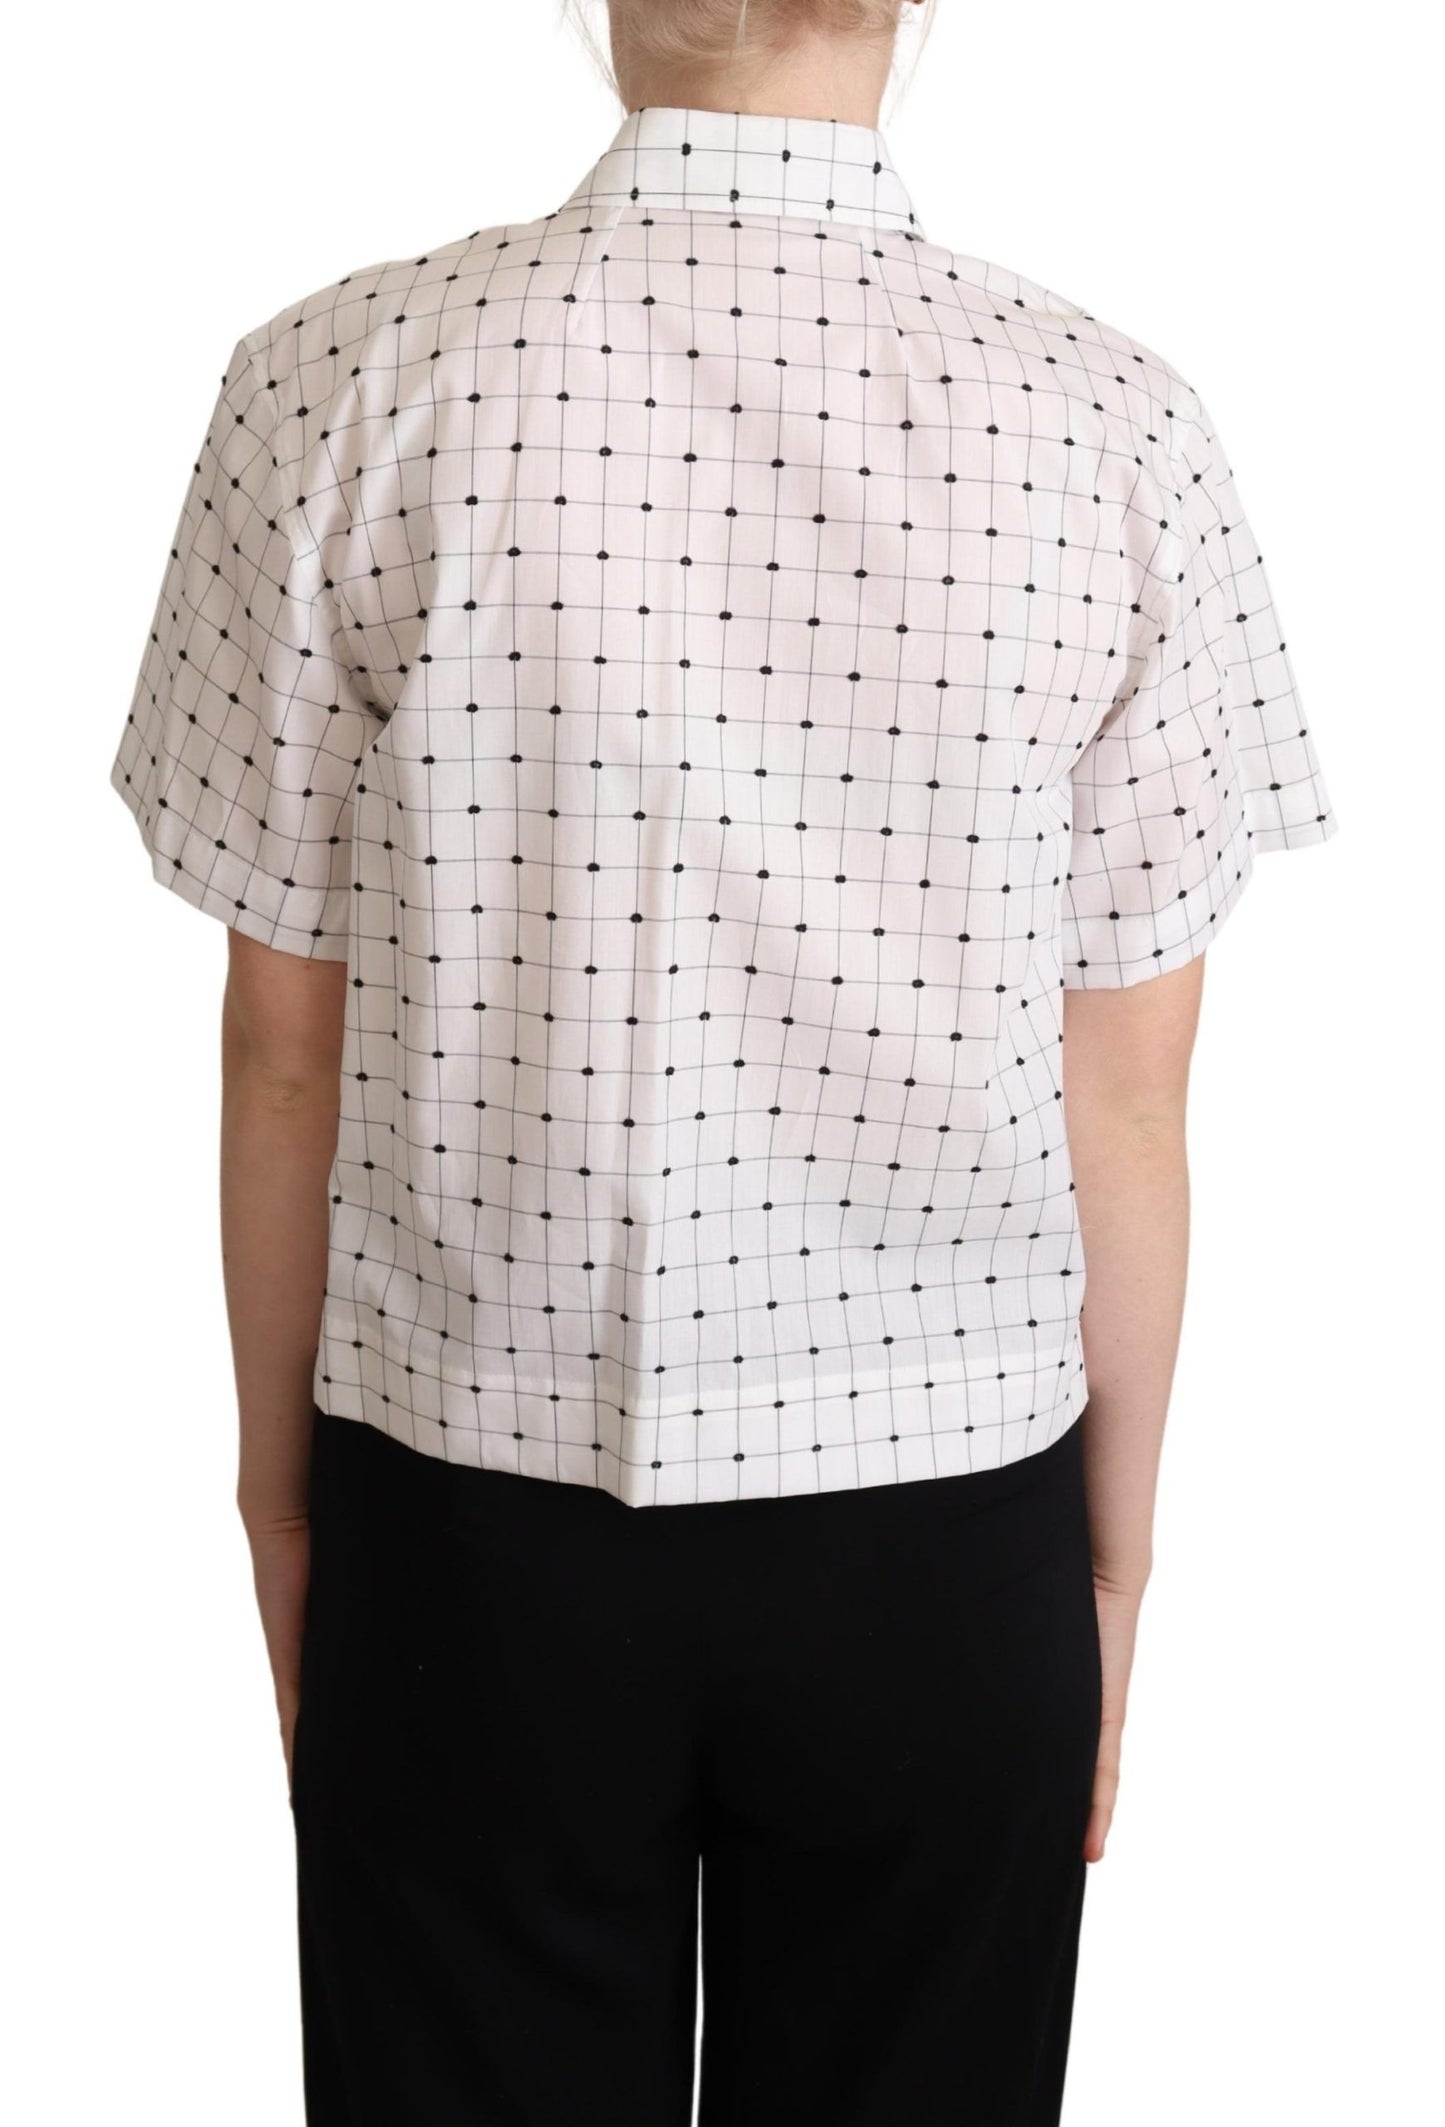 Dolce & Gabbana White Polka Dot Cotton Collet Shirt Top